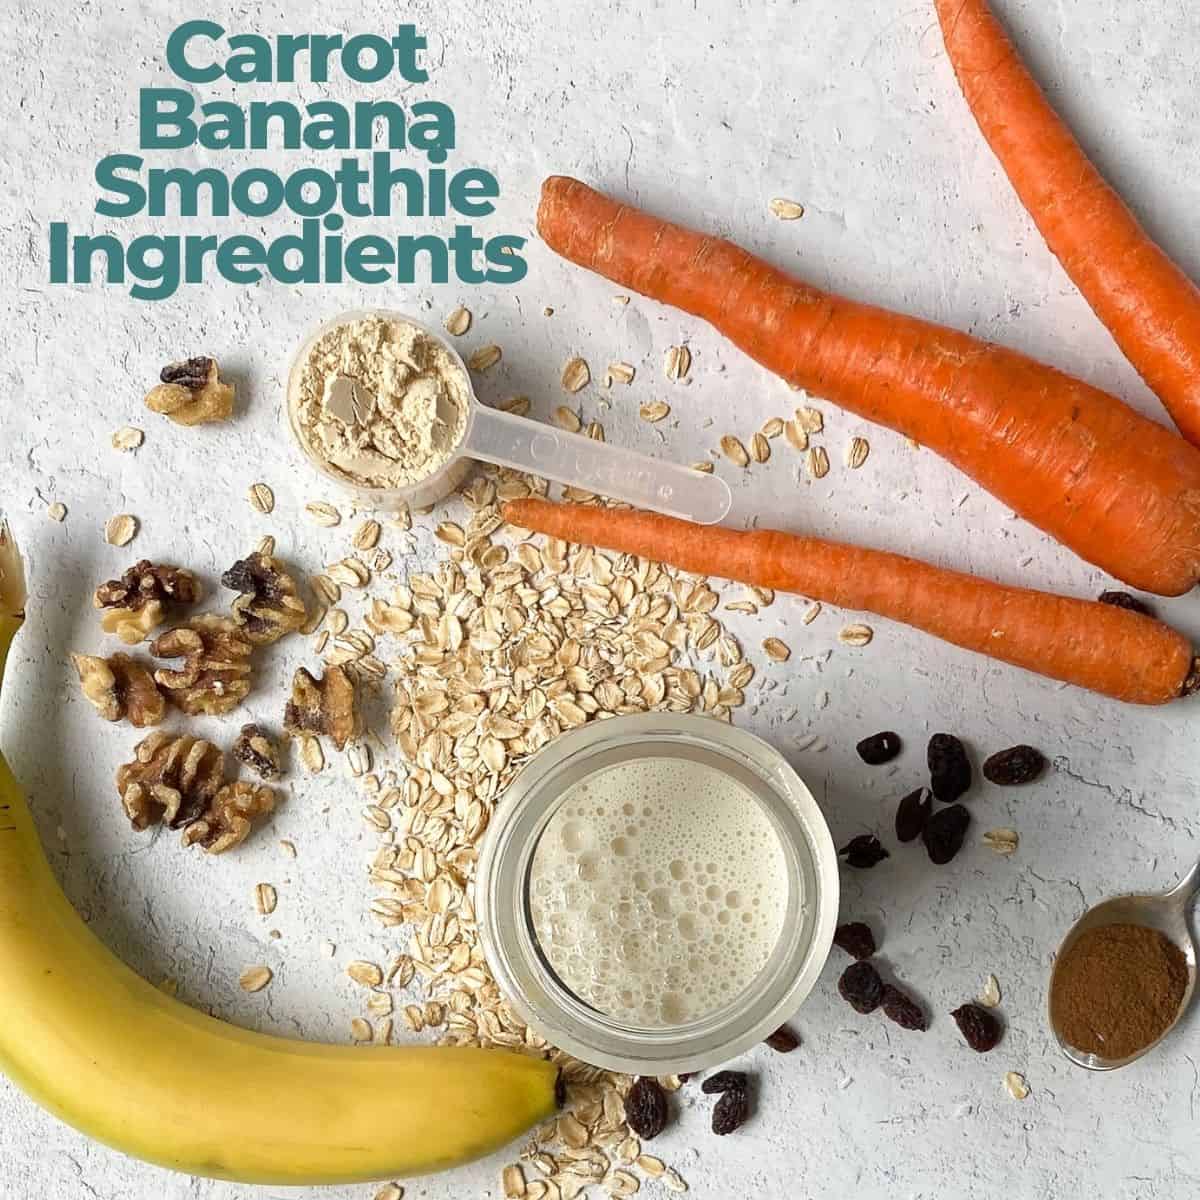 Ingredients for carrot banana smoothie: carrots, protein powder, oats, walnuts, milk, banana, raisins, flaxseed